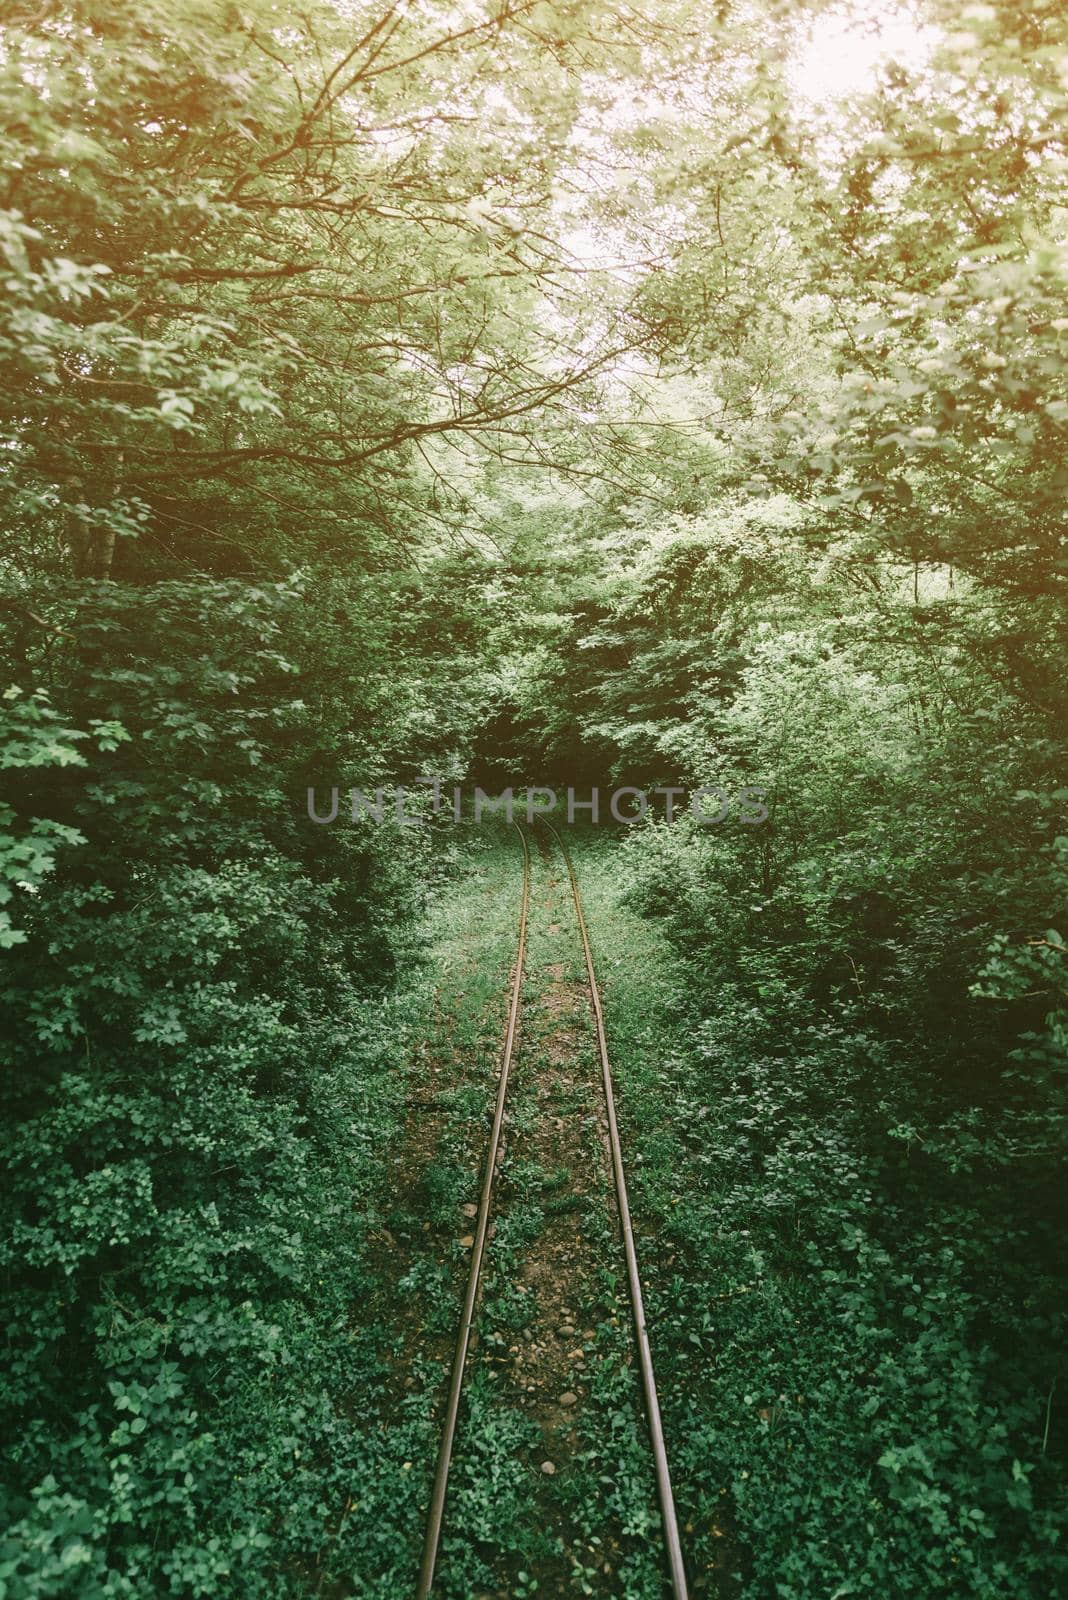 Old narrow-gauge railway in summer forest.